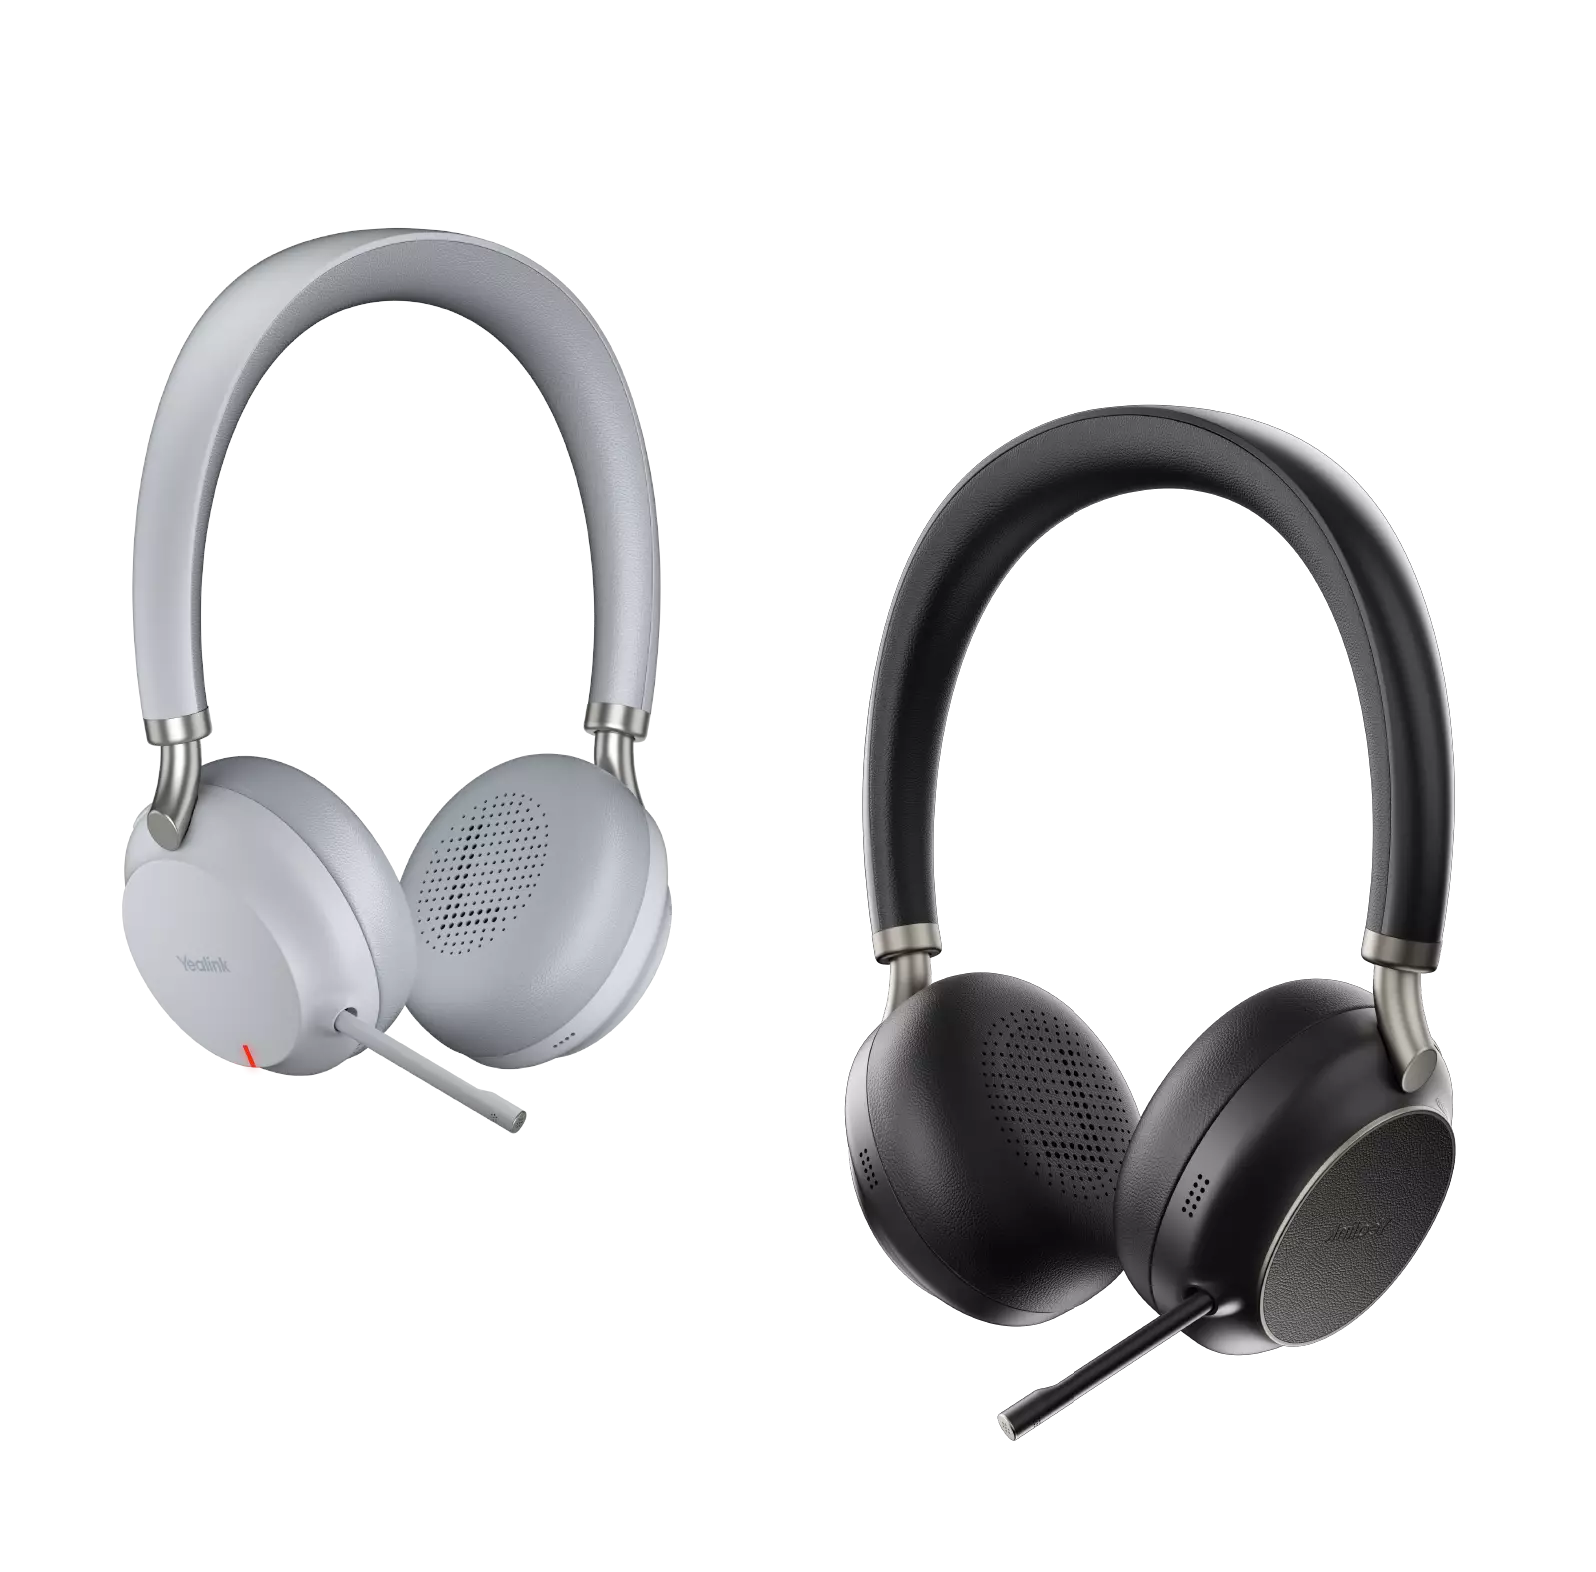 Kloud 7 offers Bluetooth wireless headphones and DECT wireless headphones.